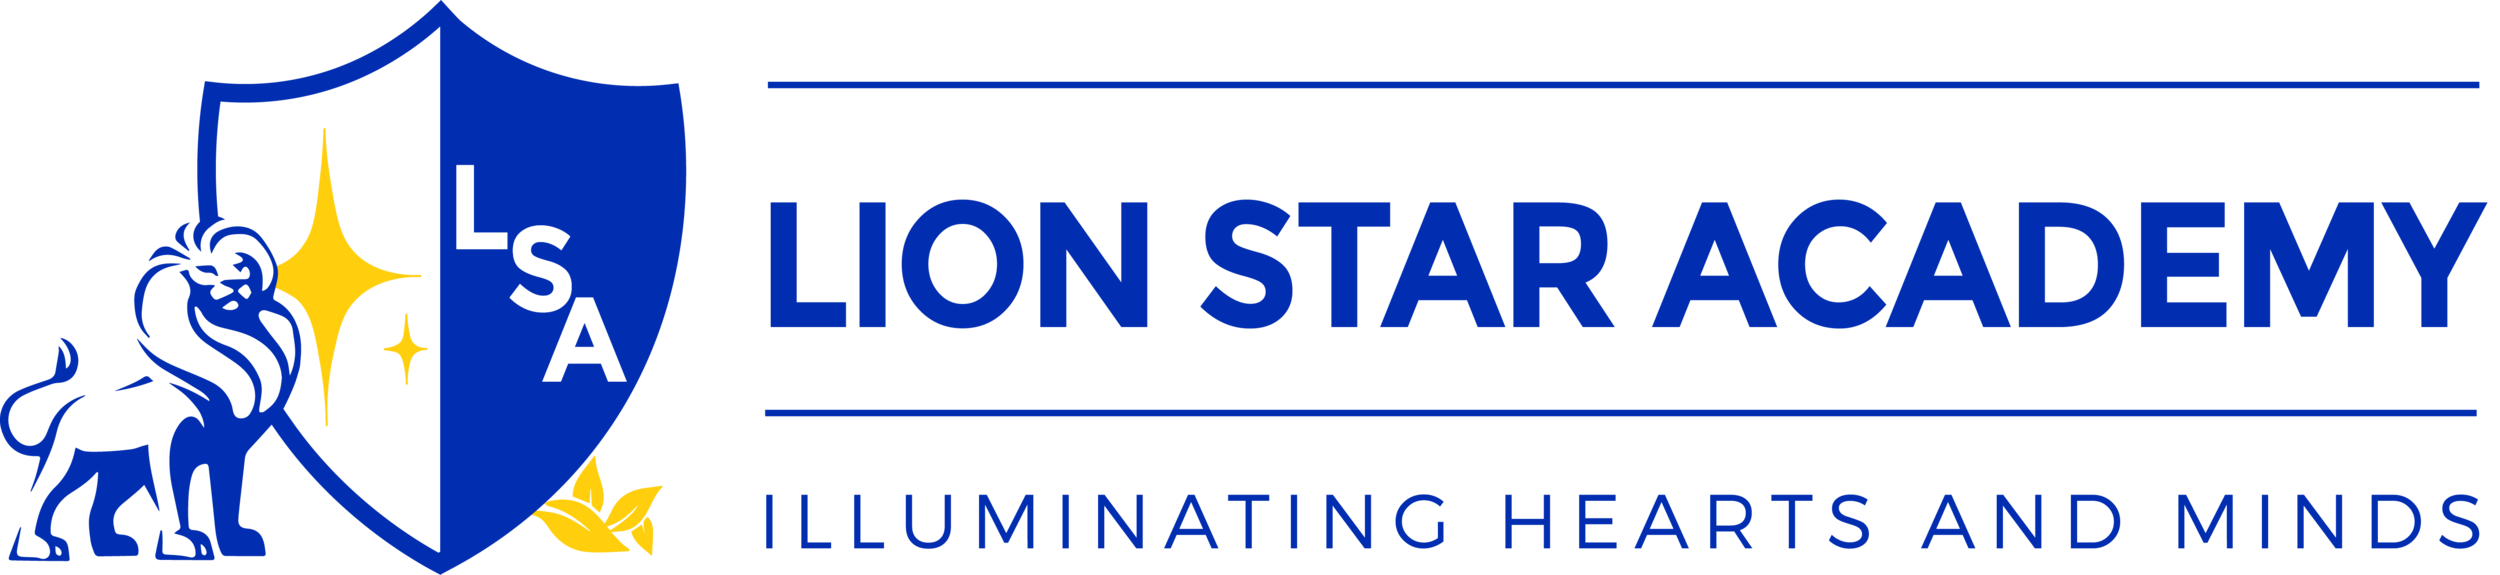 Lion Star Academy logo_horizontal (1).png